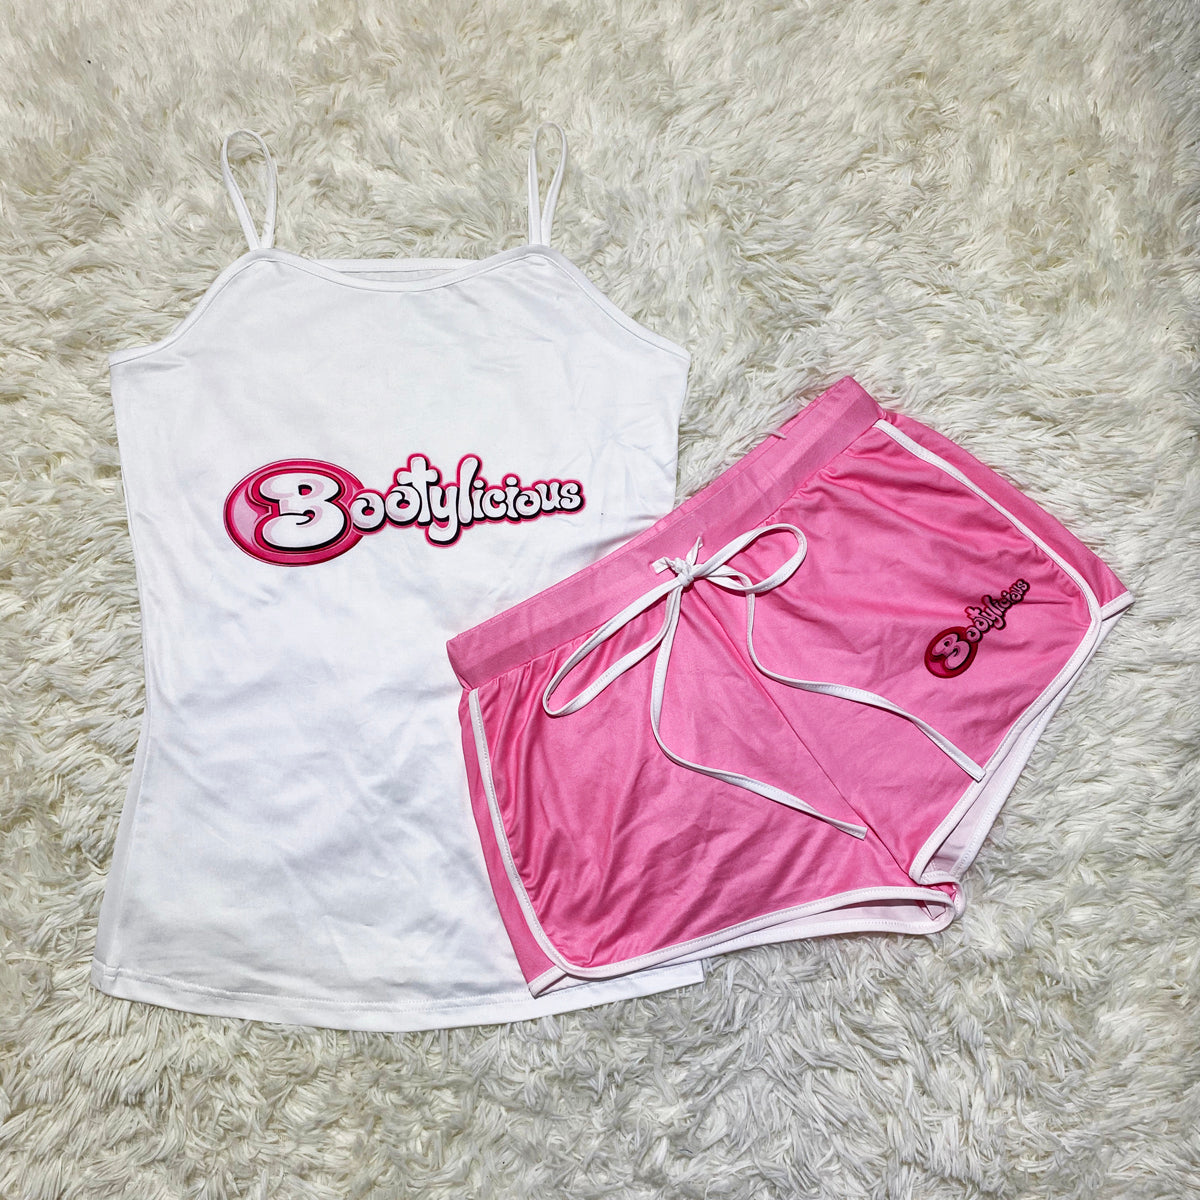 “Bootylicious” Pink 2 Piece Shorts Set